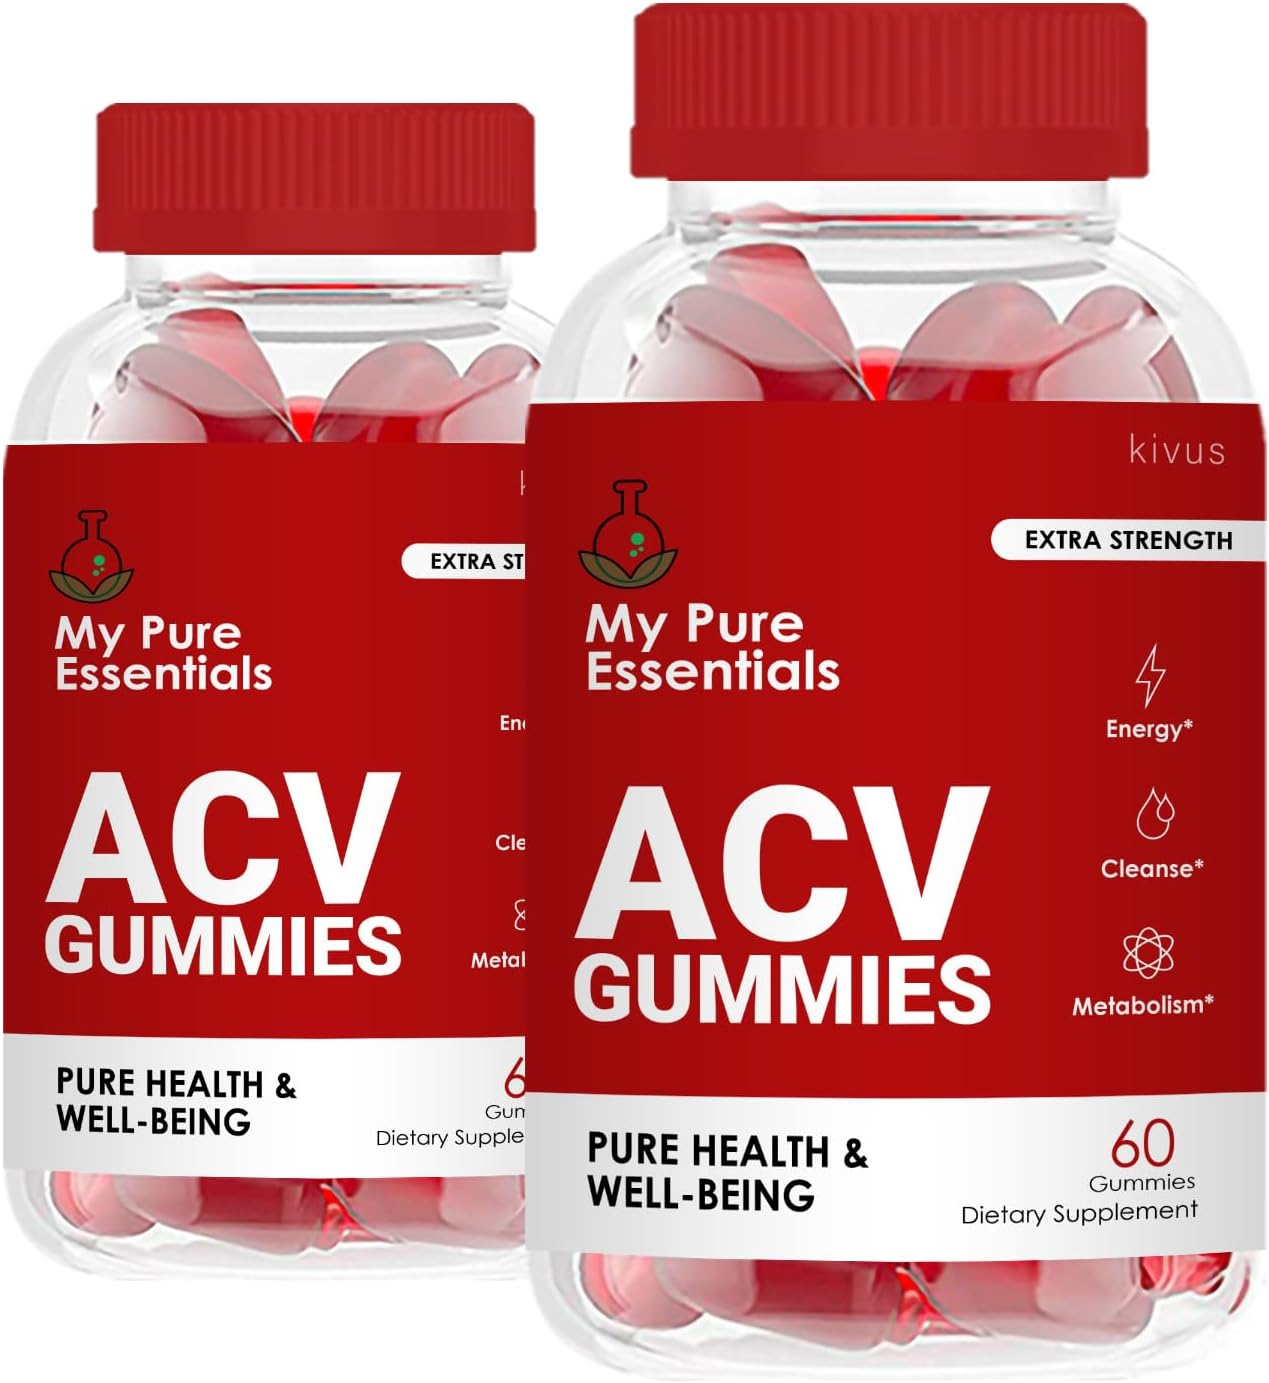 My Pure Essentials ACV gummies